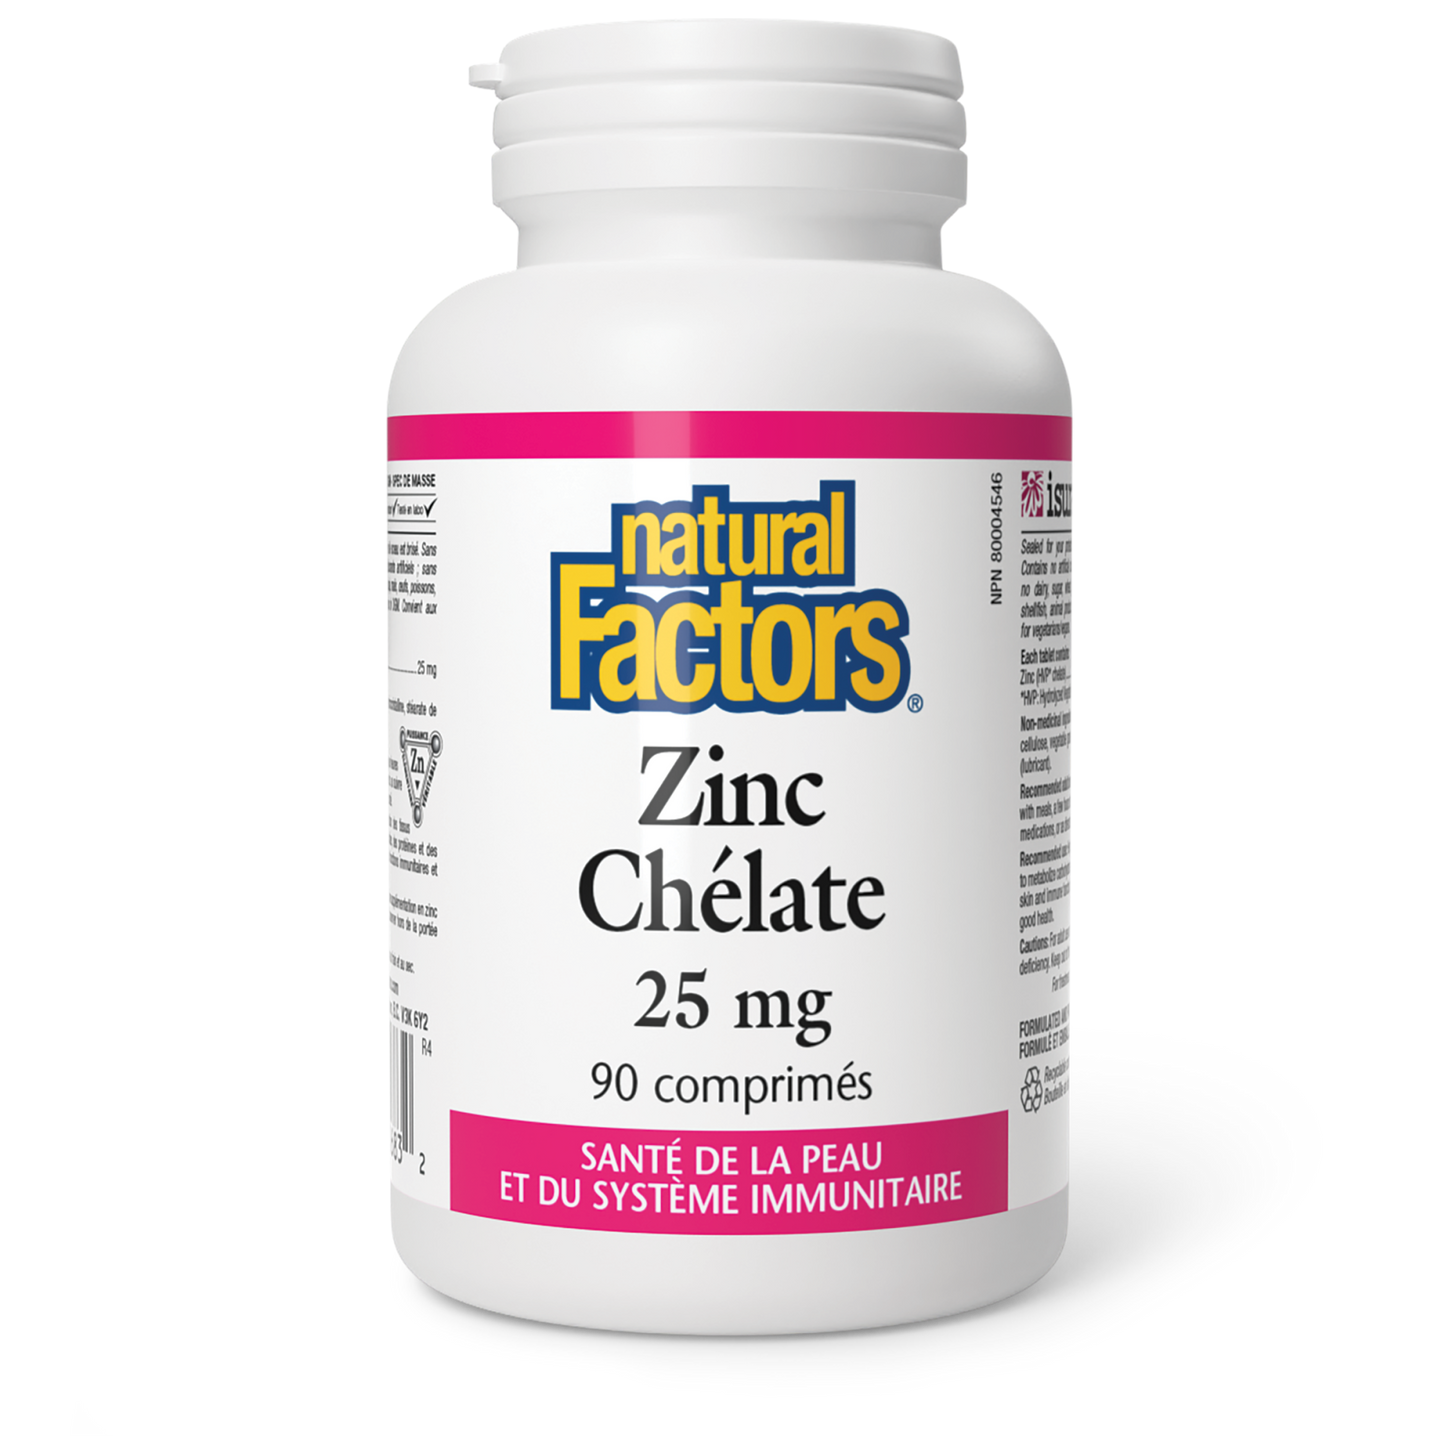 Zinc Chélate 25 mg, Natural Factors|v|image|1683